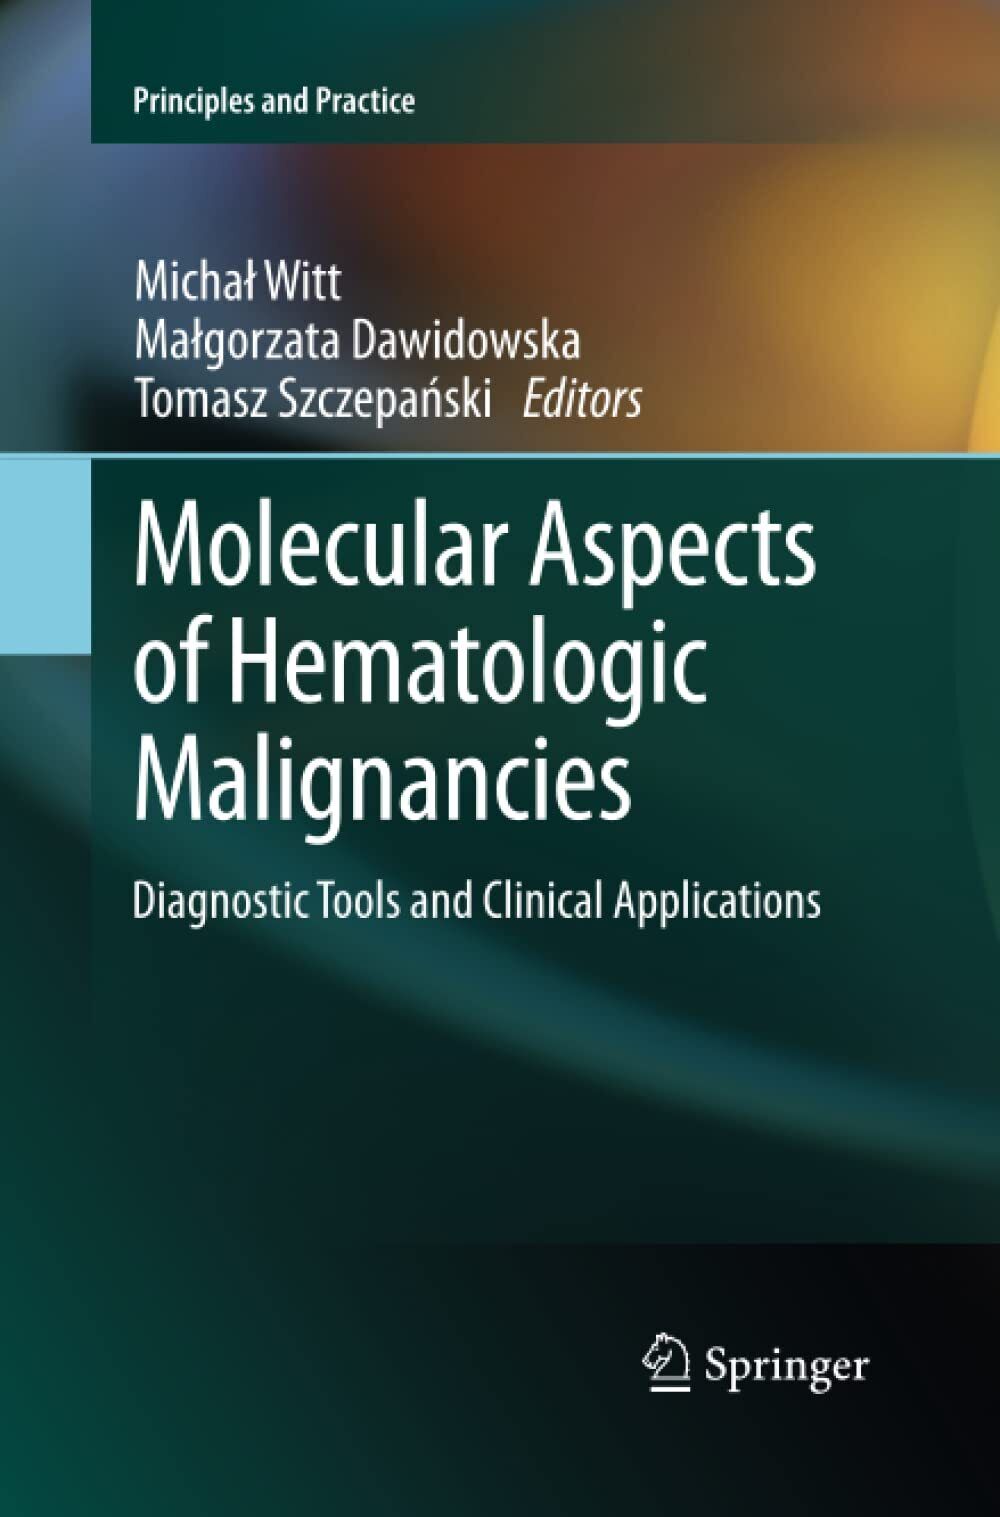 Molecular Aspects of Hematologic Malignancies - Michal Witt - Springer, 2015